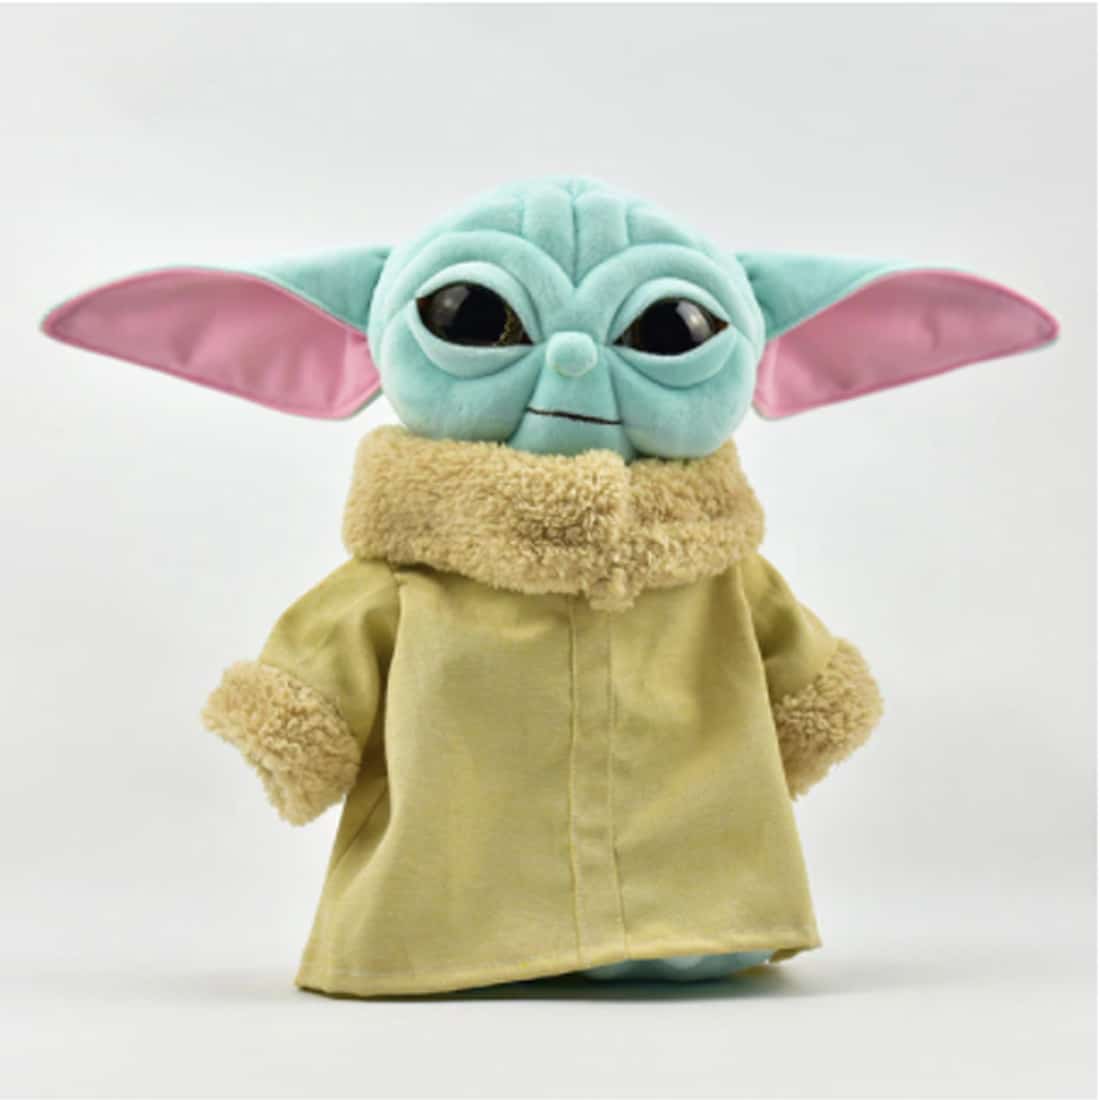 Baby Yoda blue plush